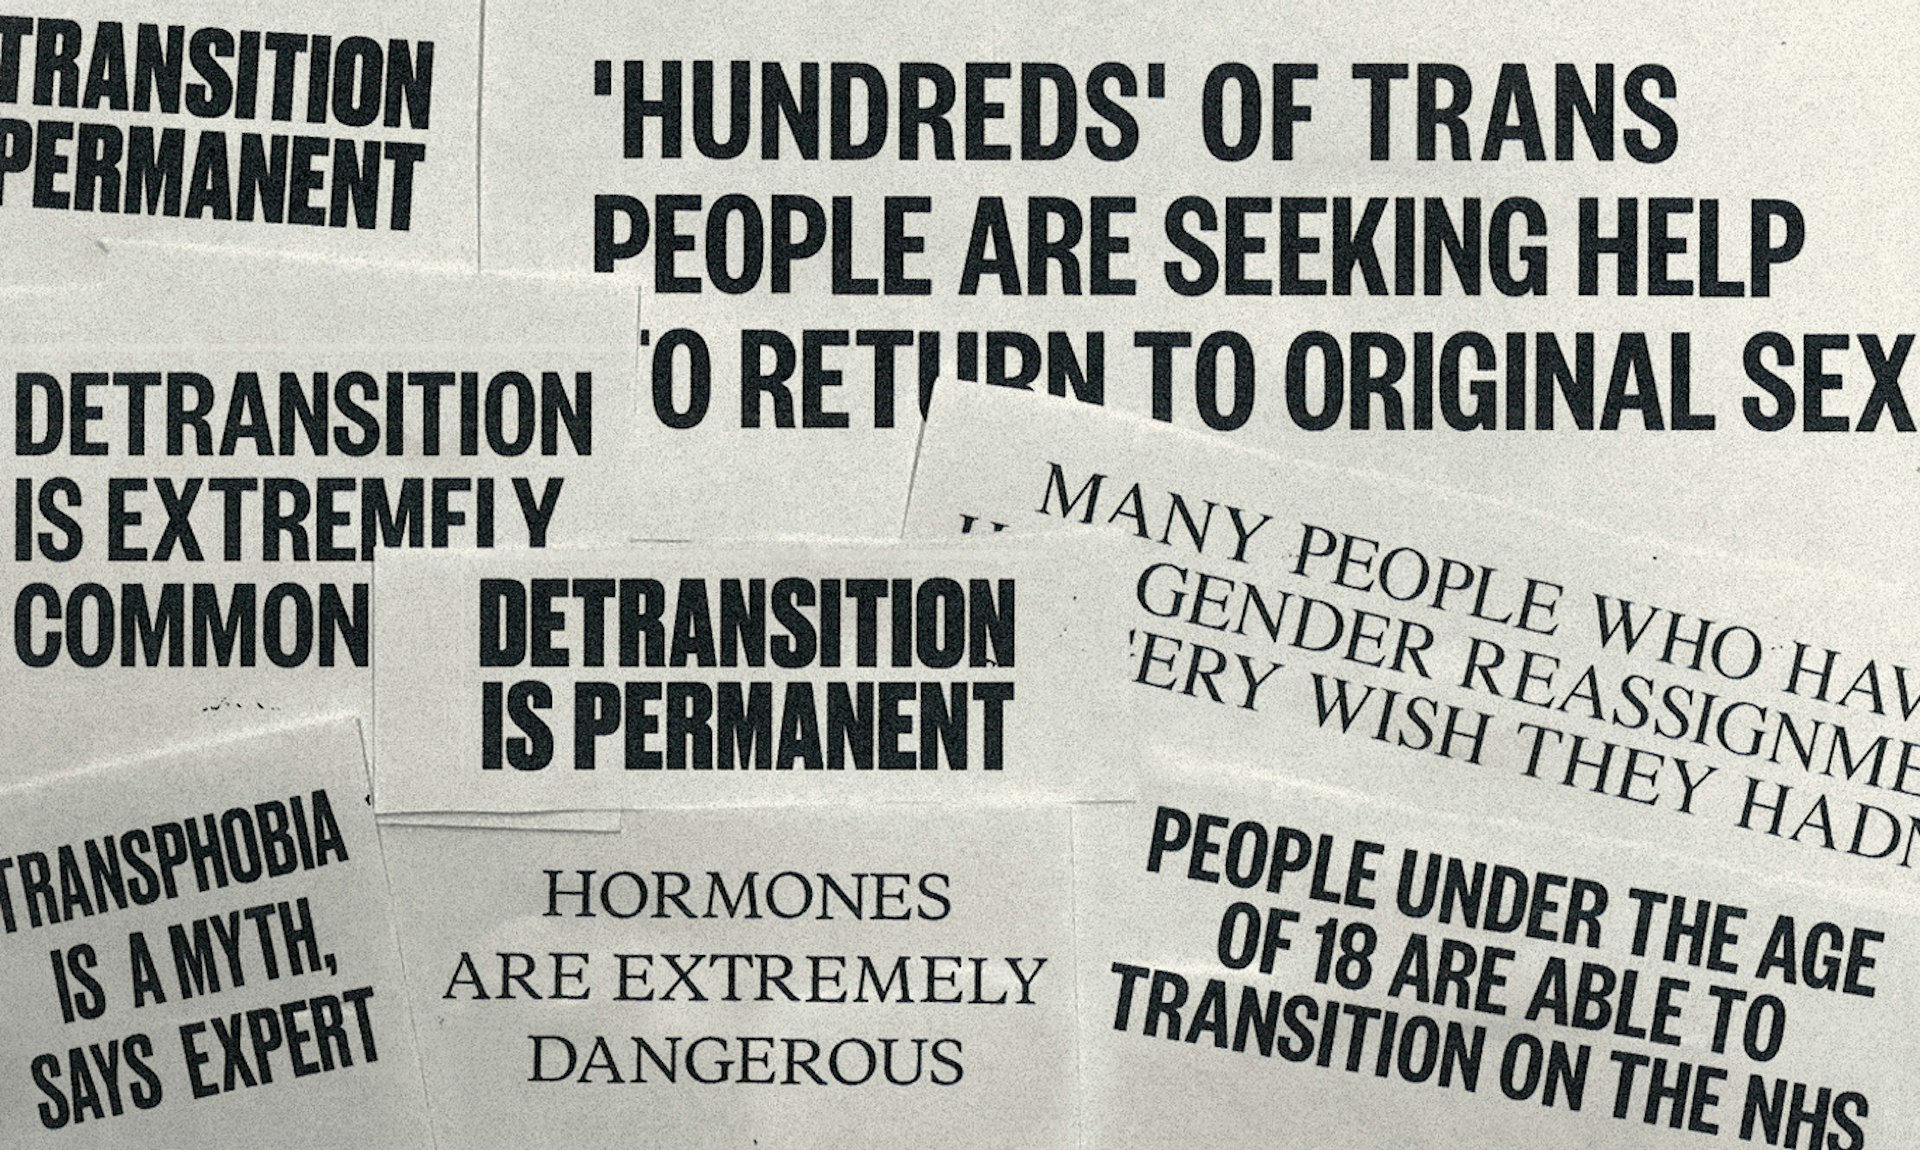 Debunking the dangerous myths around detransition